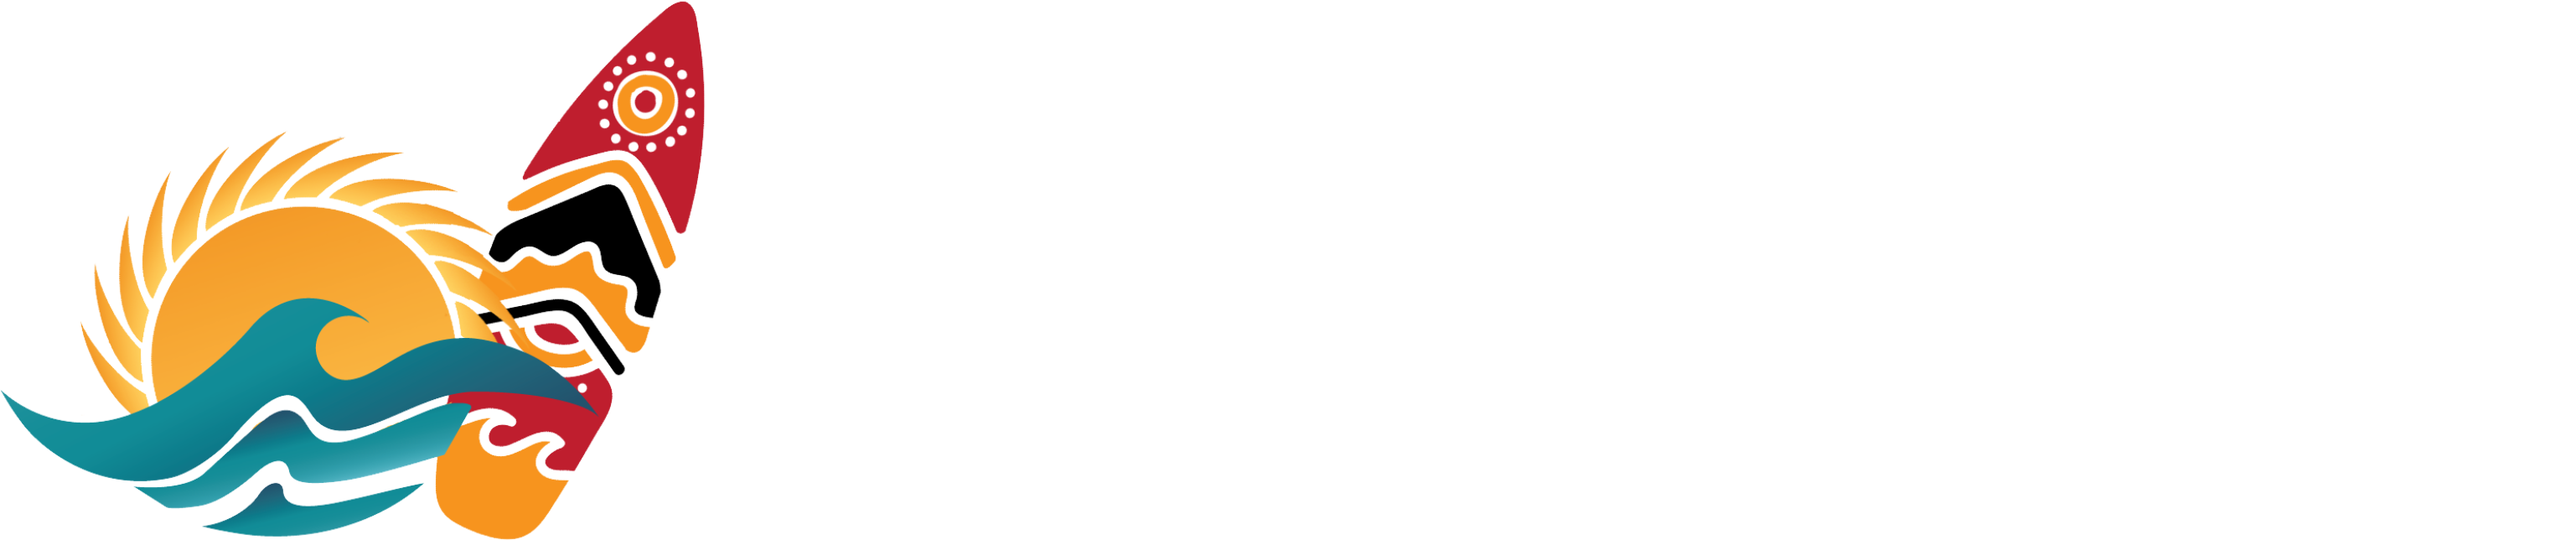 Siargao-Island Travel & Tours Logo